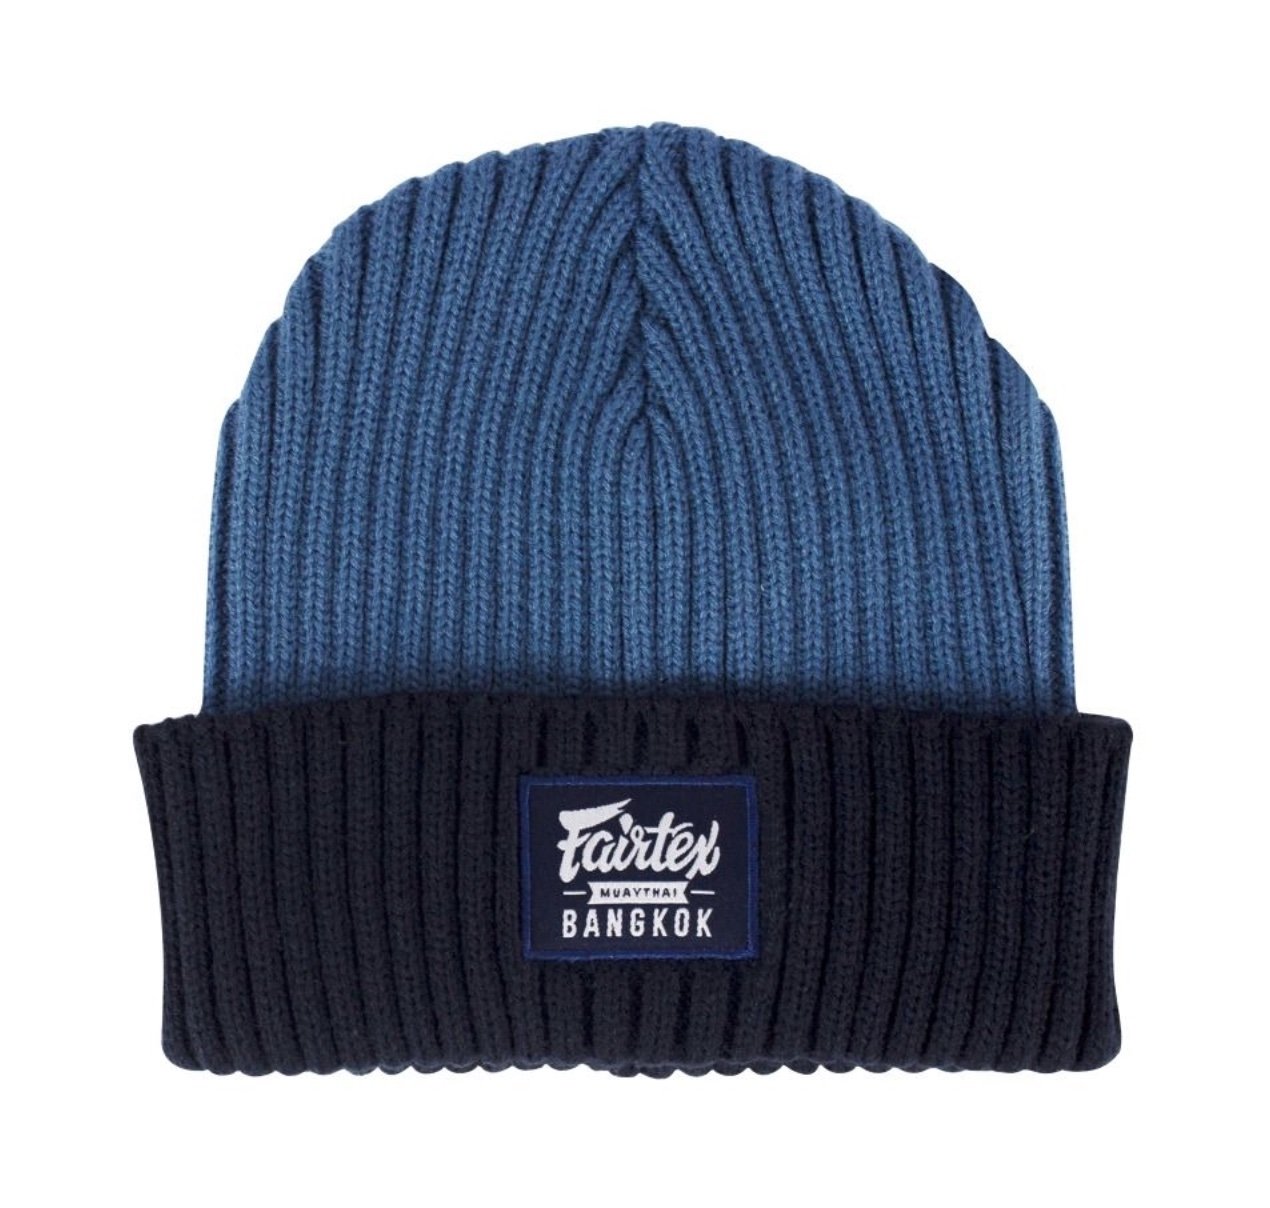 Fairtex Beanie Winter Hat - BN7 - Blue - Nylon Bag Packaging Included - image 1 of 6